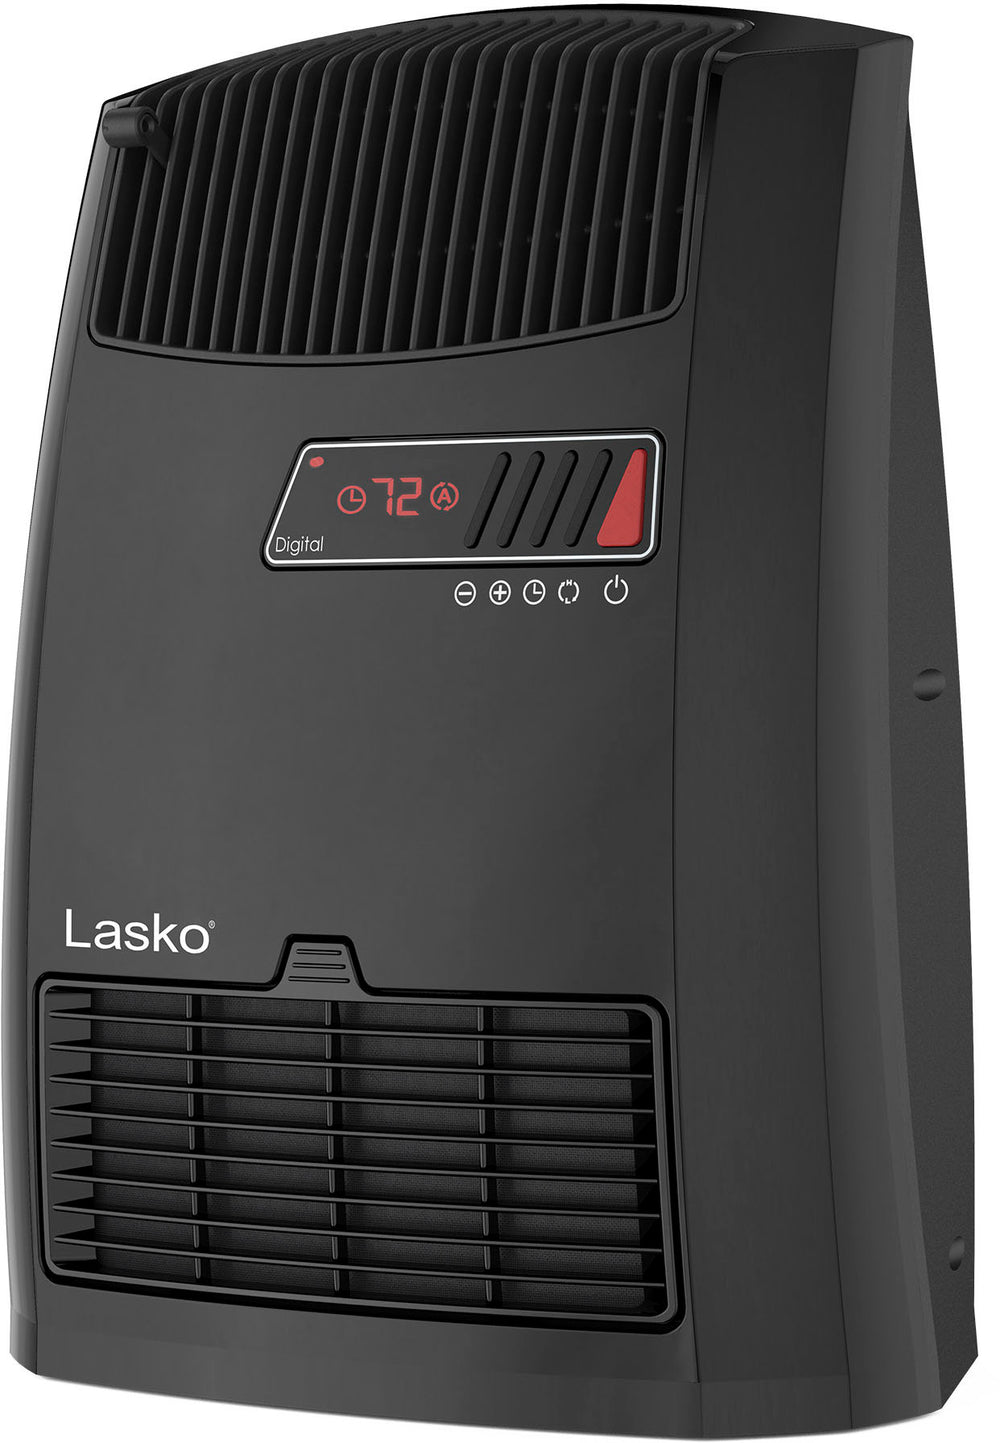 Lasko - Digital Ceramic Heater with Warm Air Motion Technology - Black_1